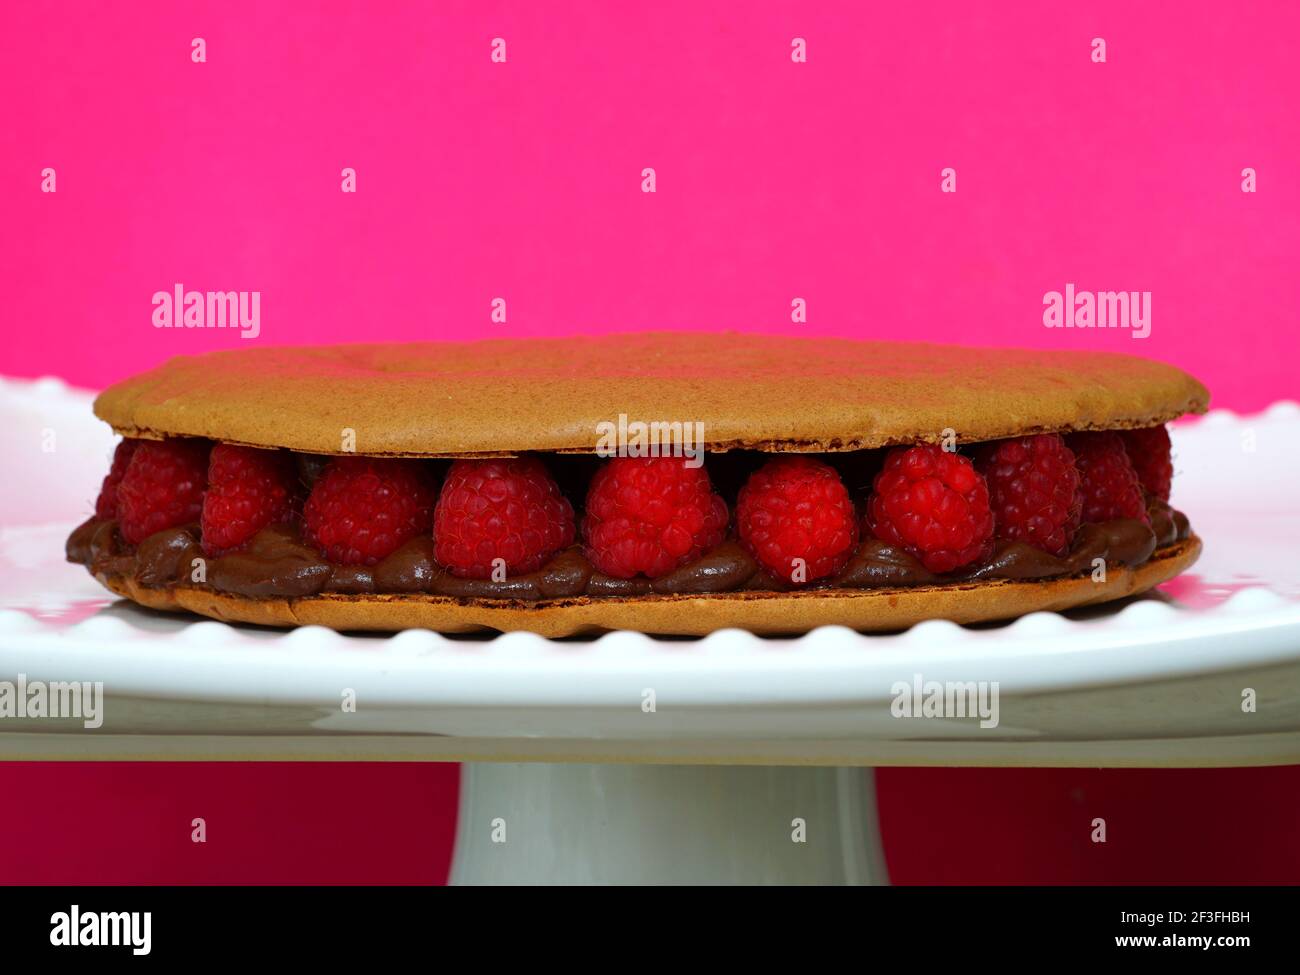 A giant chocolate macaron cake with fresh raspberries Stock Photo